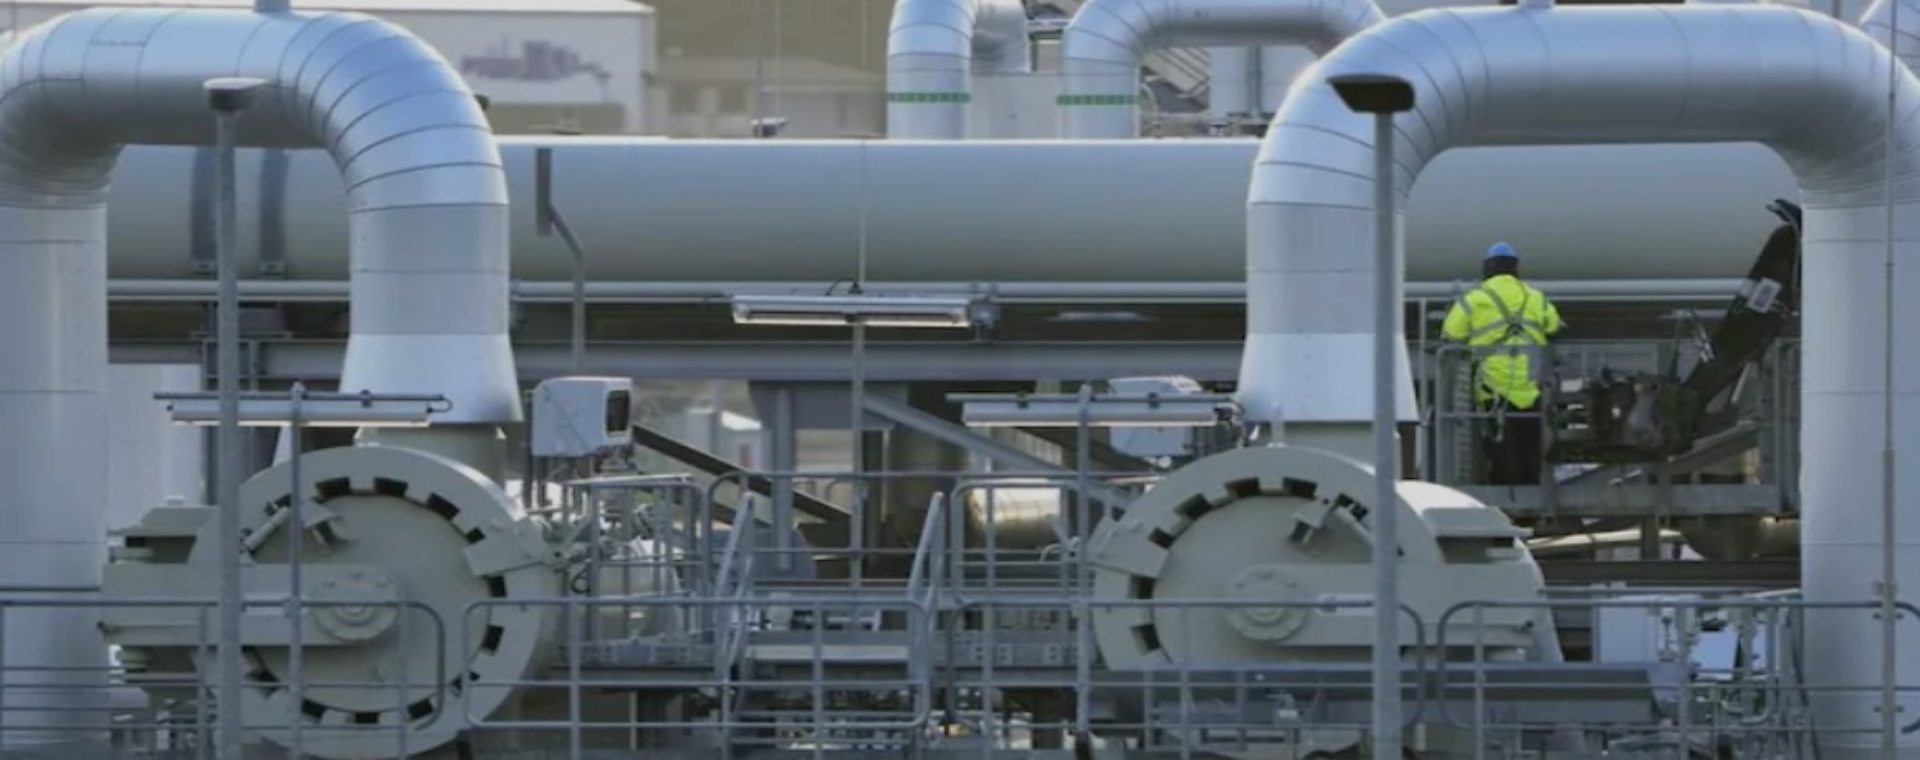 Jaringan pipa gas Nord Stream 2. Jerman mencurigai sistem pipa gas Nord Stream 2 dirusak oleh tindakan sabotase. Dugaan ini menjadi eskalasi besar dalam konflik antara Rusia dan Eropa. Dilansir Bloomberg pada Rabu (28/9/2022), seorang pejabat keamanan Jerman mengatakan bukti mengarah kepada temuan tindakan sabotase terhadap pipa gas daripada masalah teknis./Istimewa